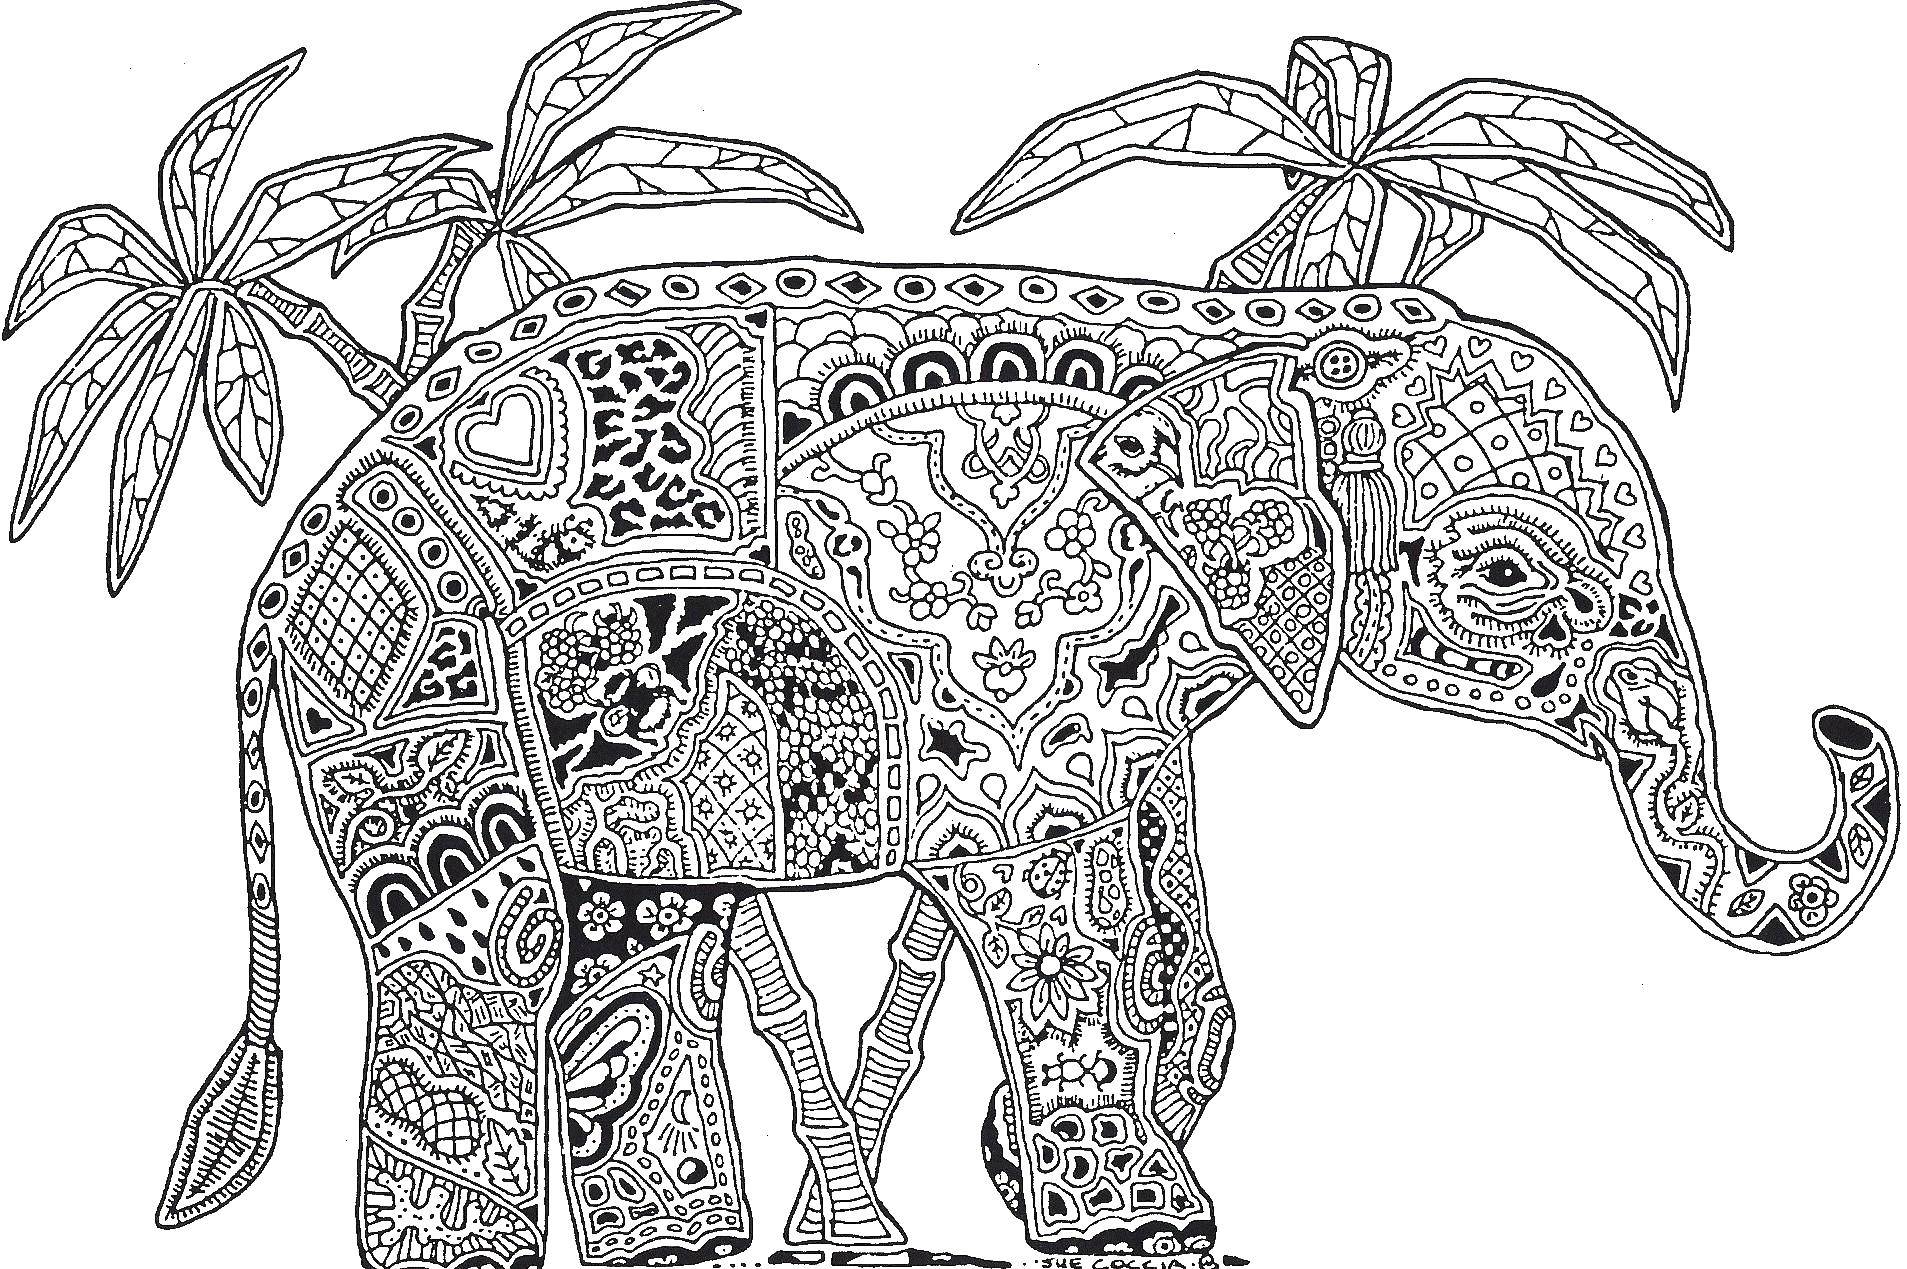 Coloring Elephant pattern. Category patterns. Tags:  Elephant, pattern.